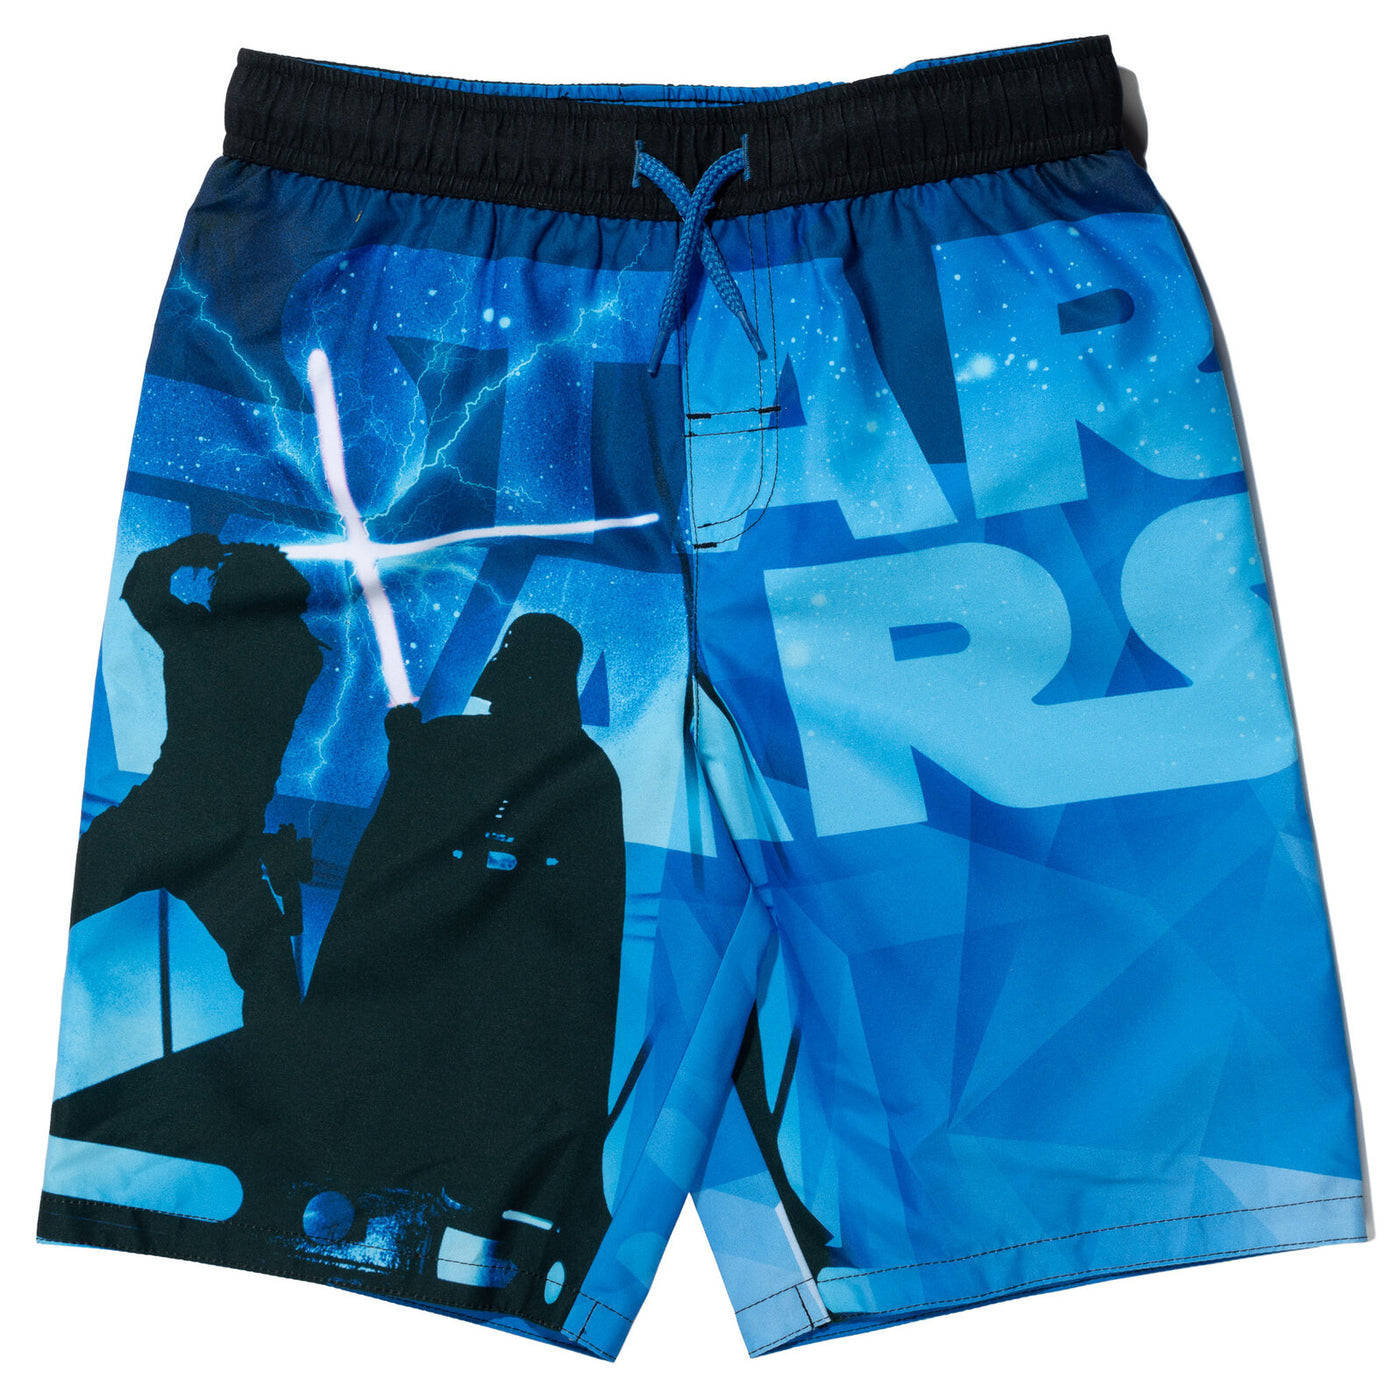 Star Wars Yoda 3 Pack Swim Trunks Bathing Suits